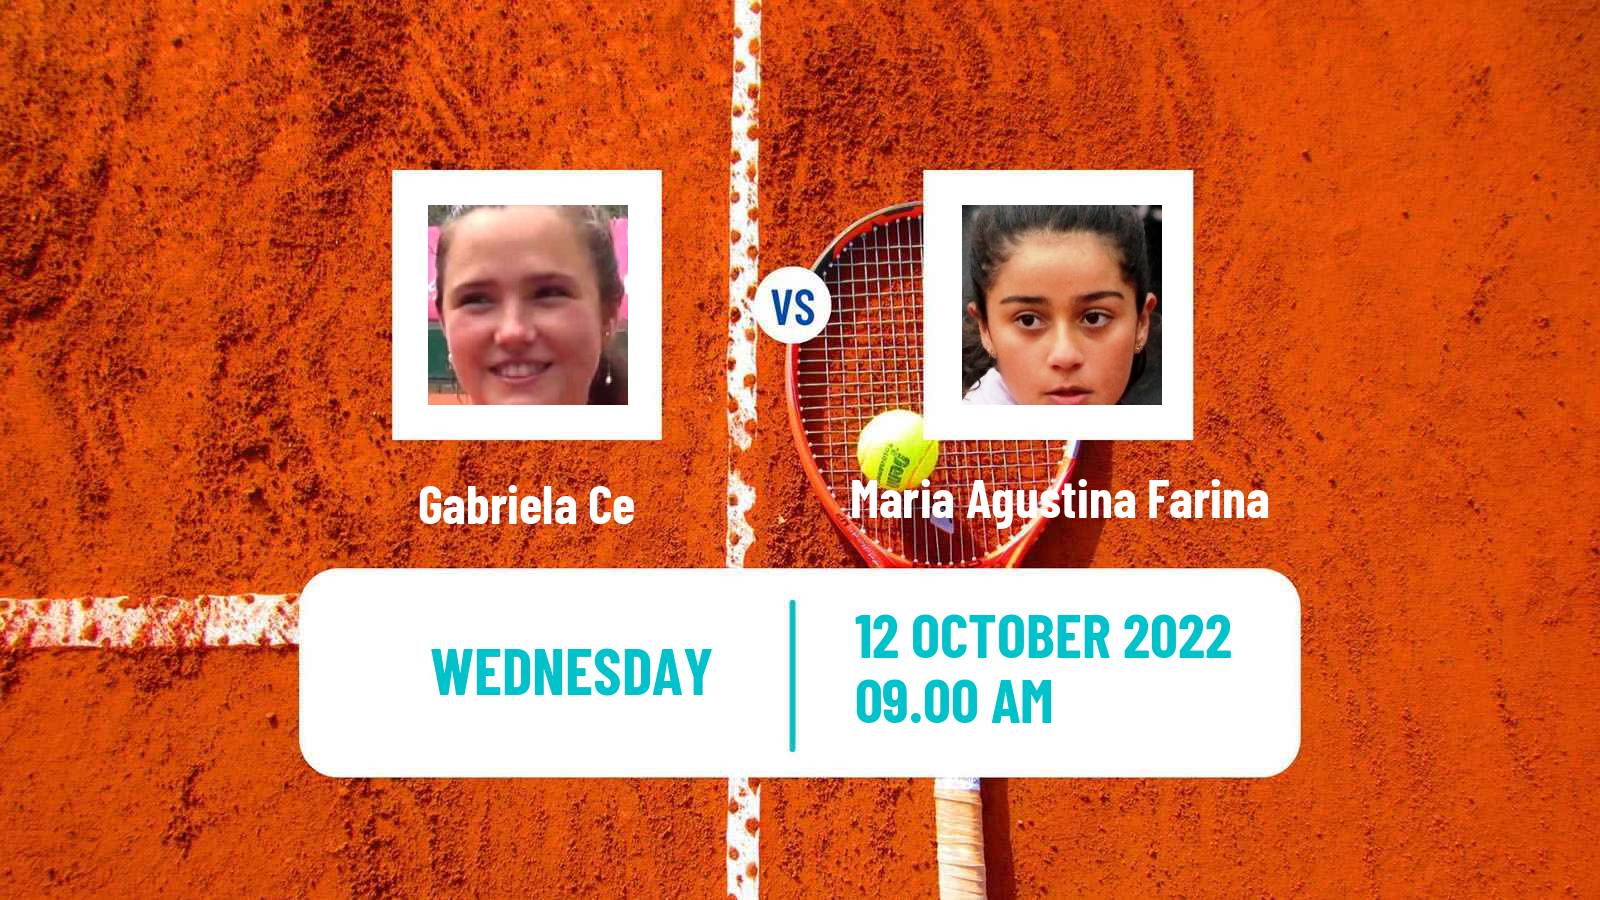 Tennis ITF Tournaments Gabriela Ce - Maria Agustina Farina